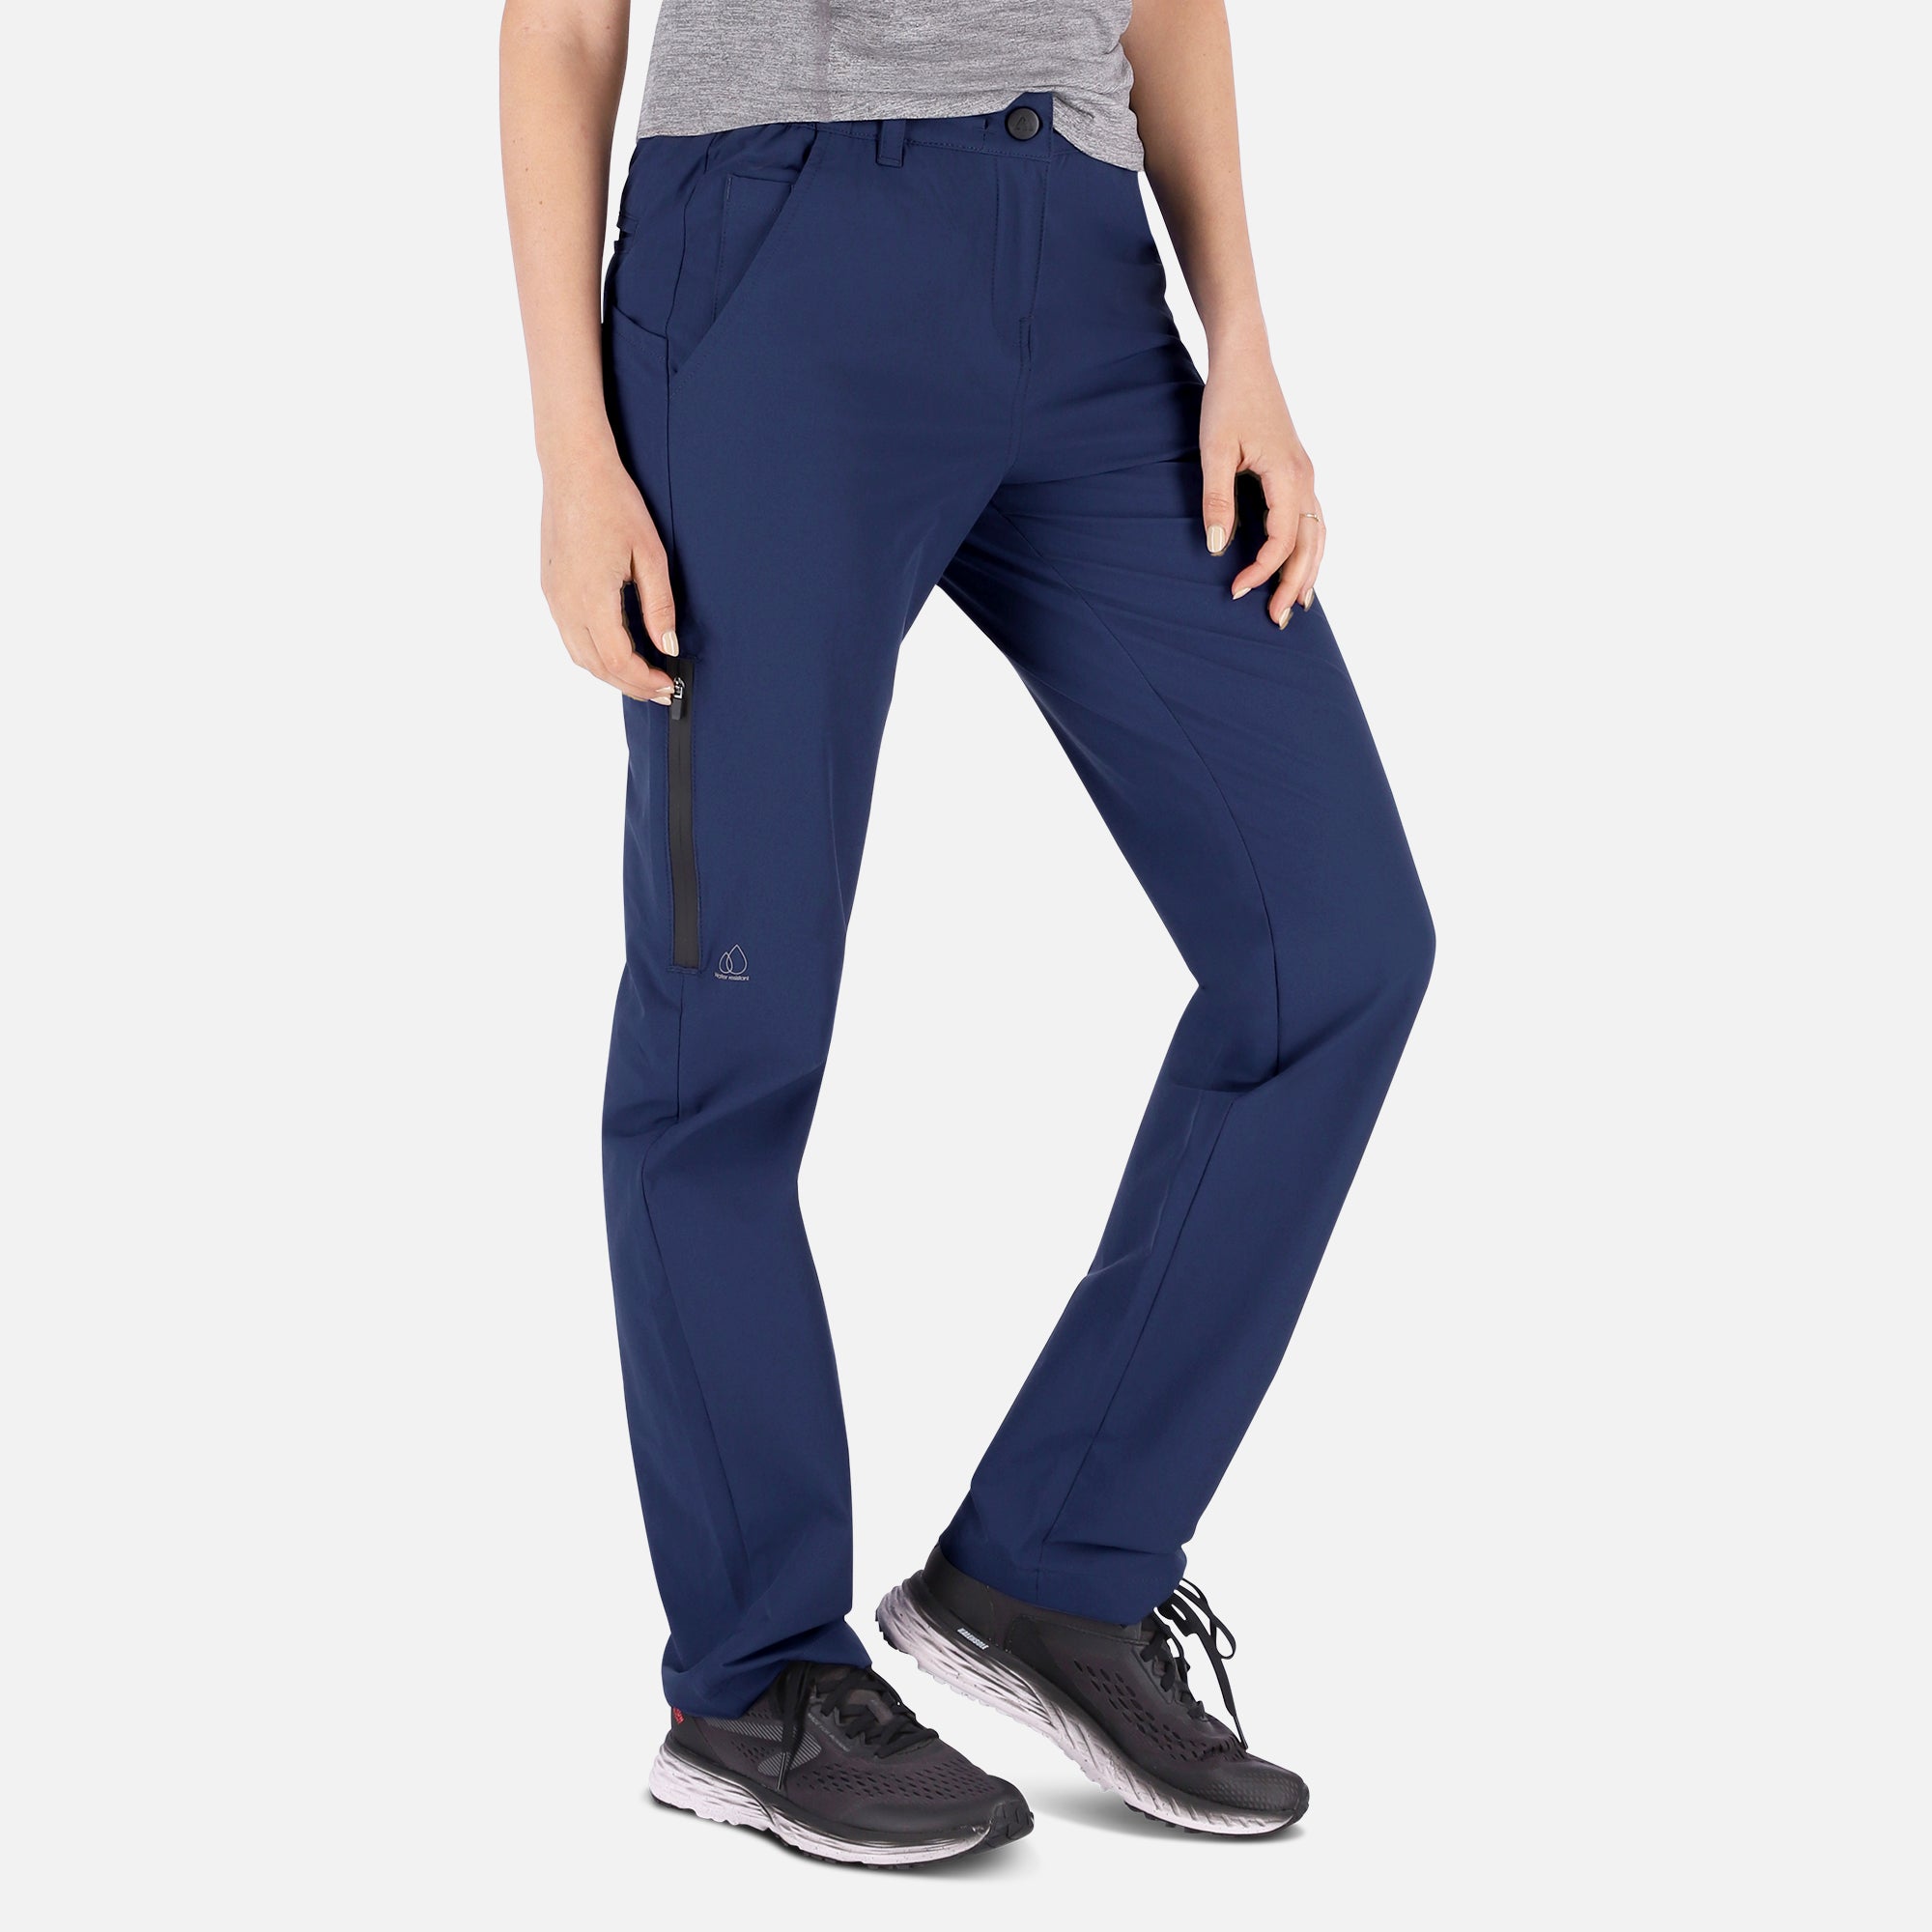 Explorer Pants - Navy Blue, Women's Pants